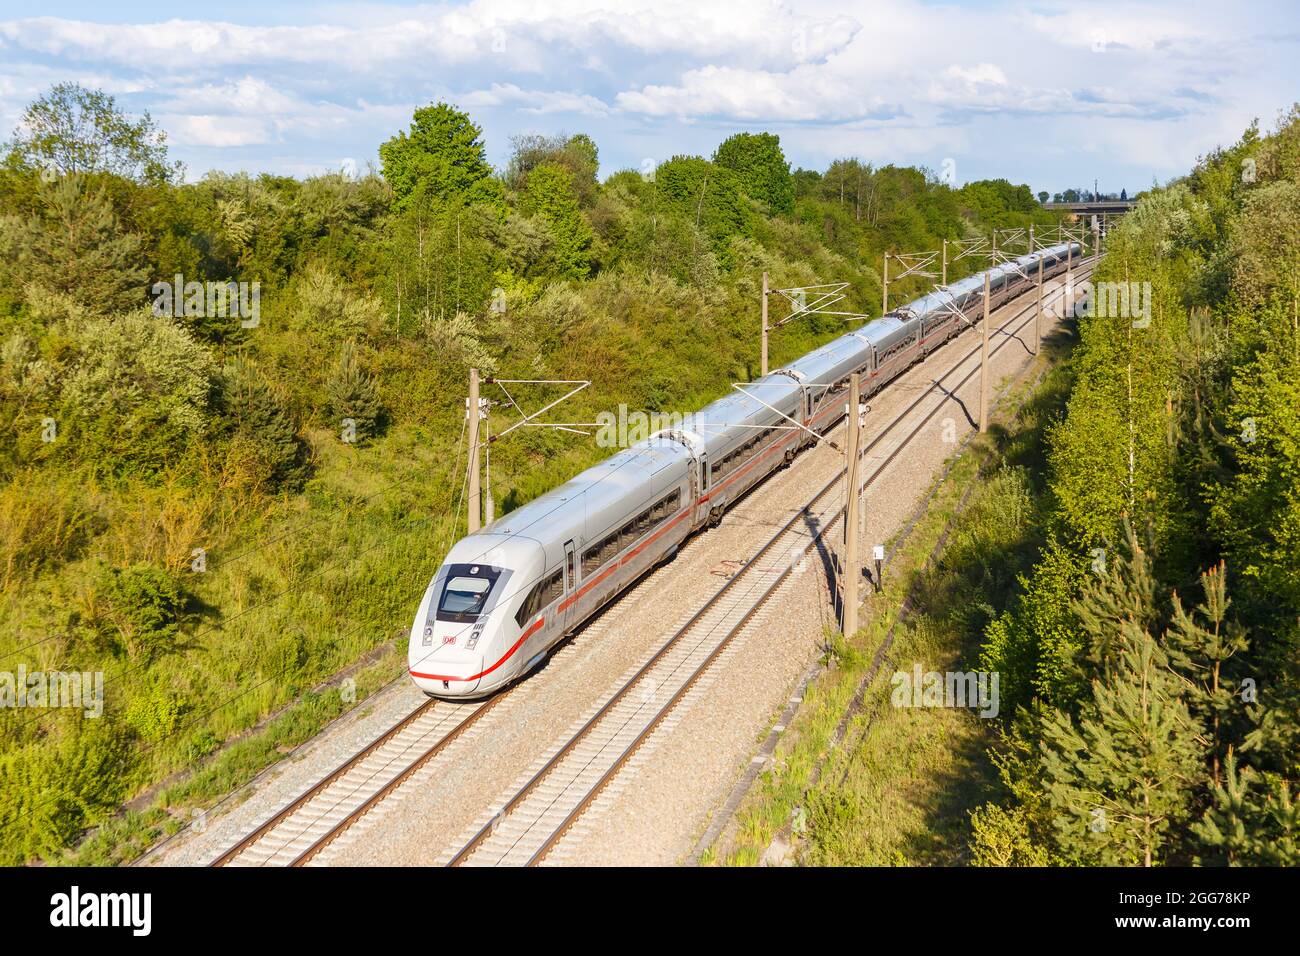 Stuttgart, Germany - May 14, 2021: ICE 4 Deutsche Bahn DB high-speed train railway line Mannheim-Stuttgart in Germany. Stock Photo